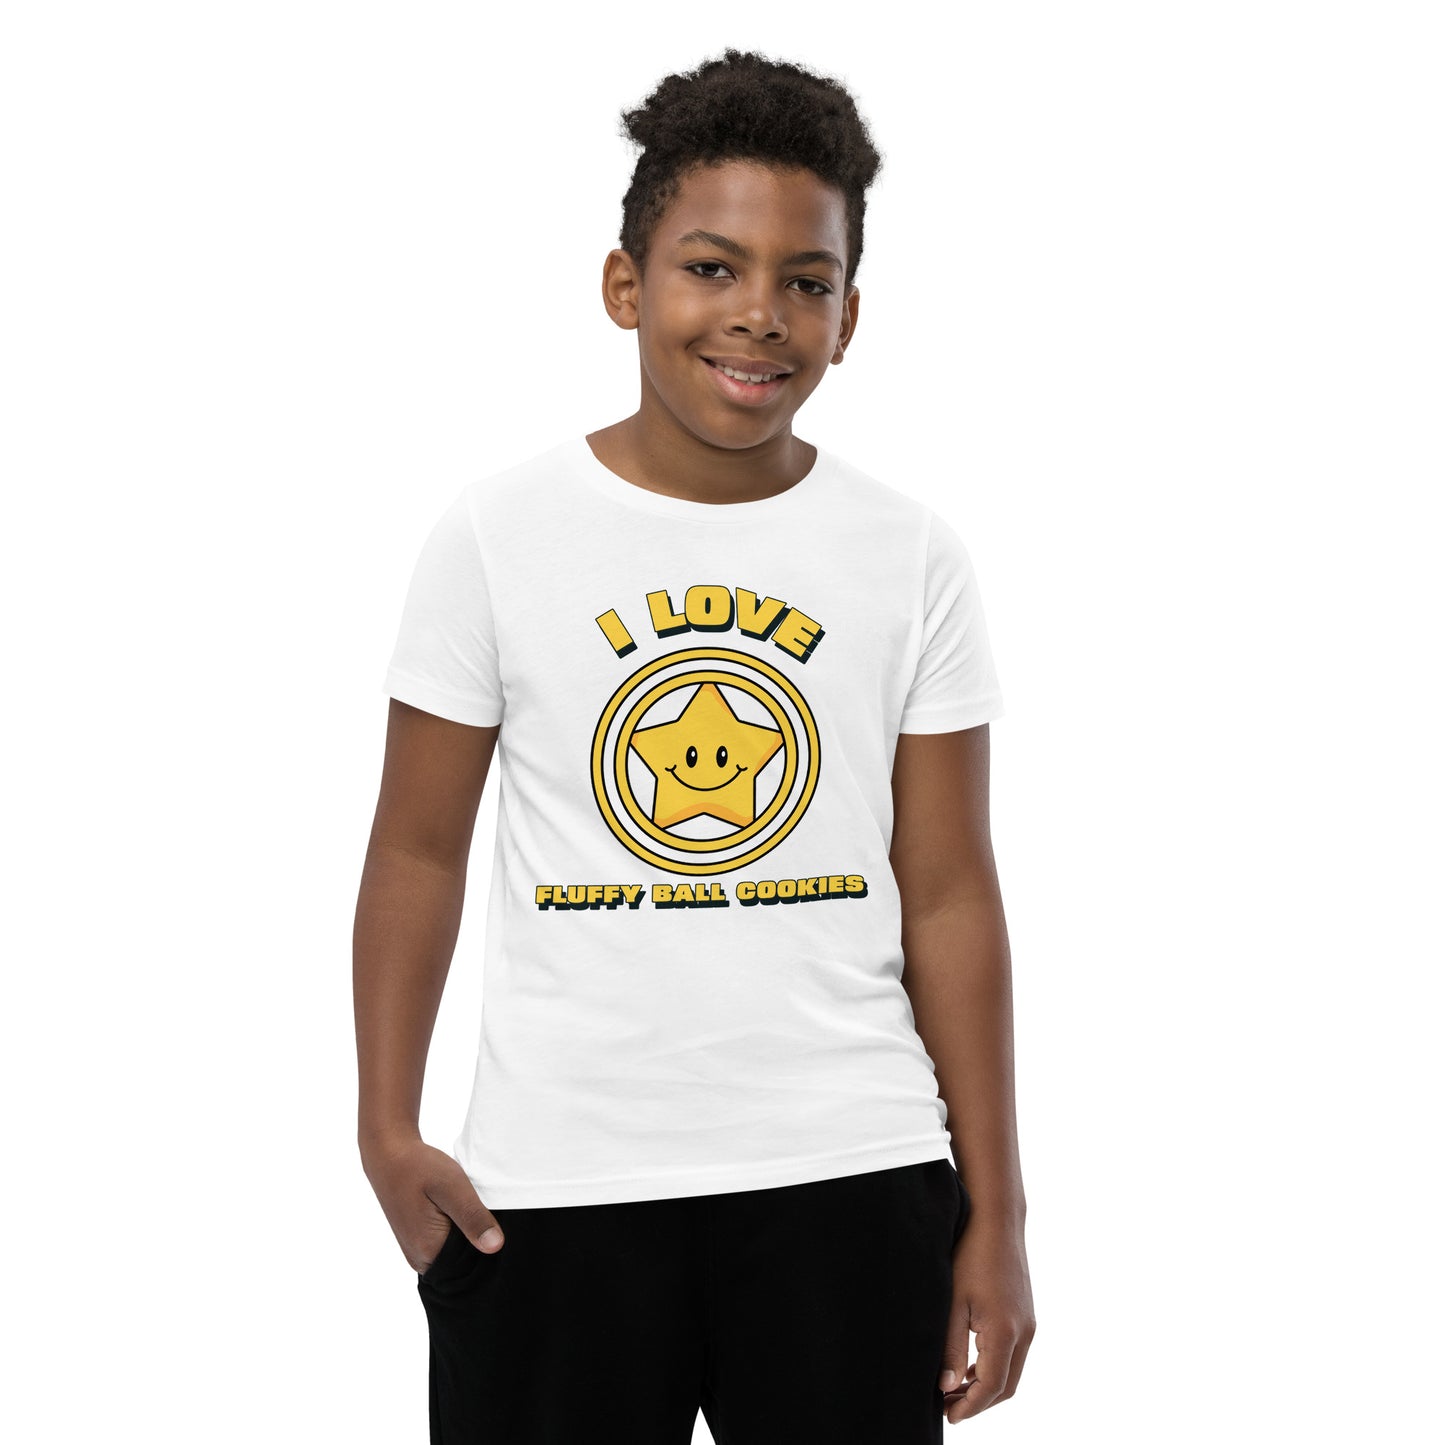 T-shirt Youth Star